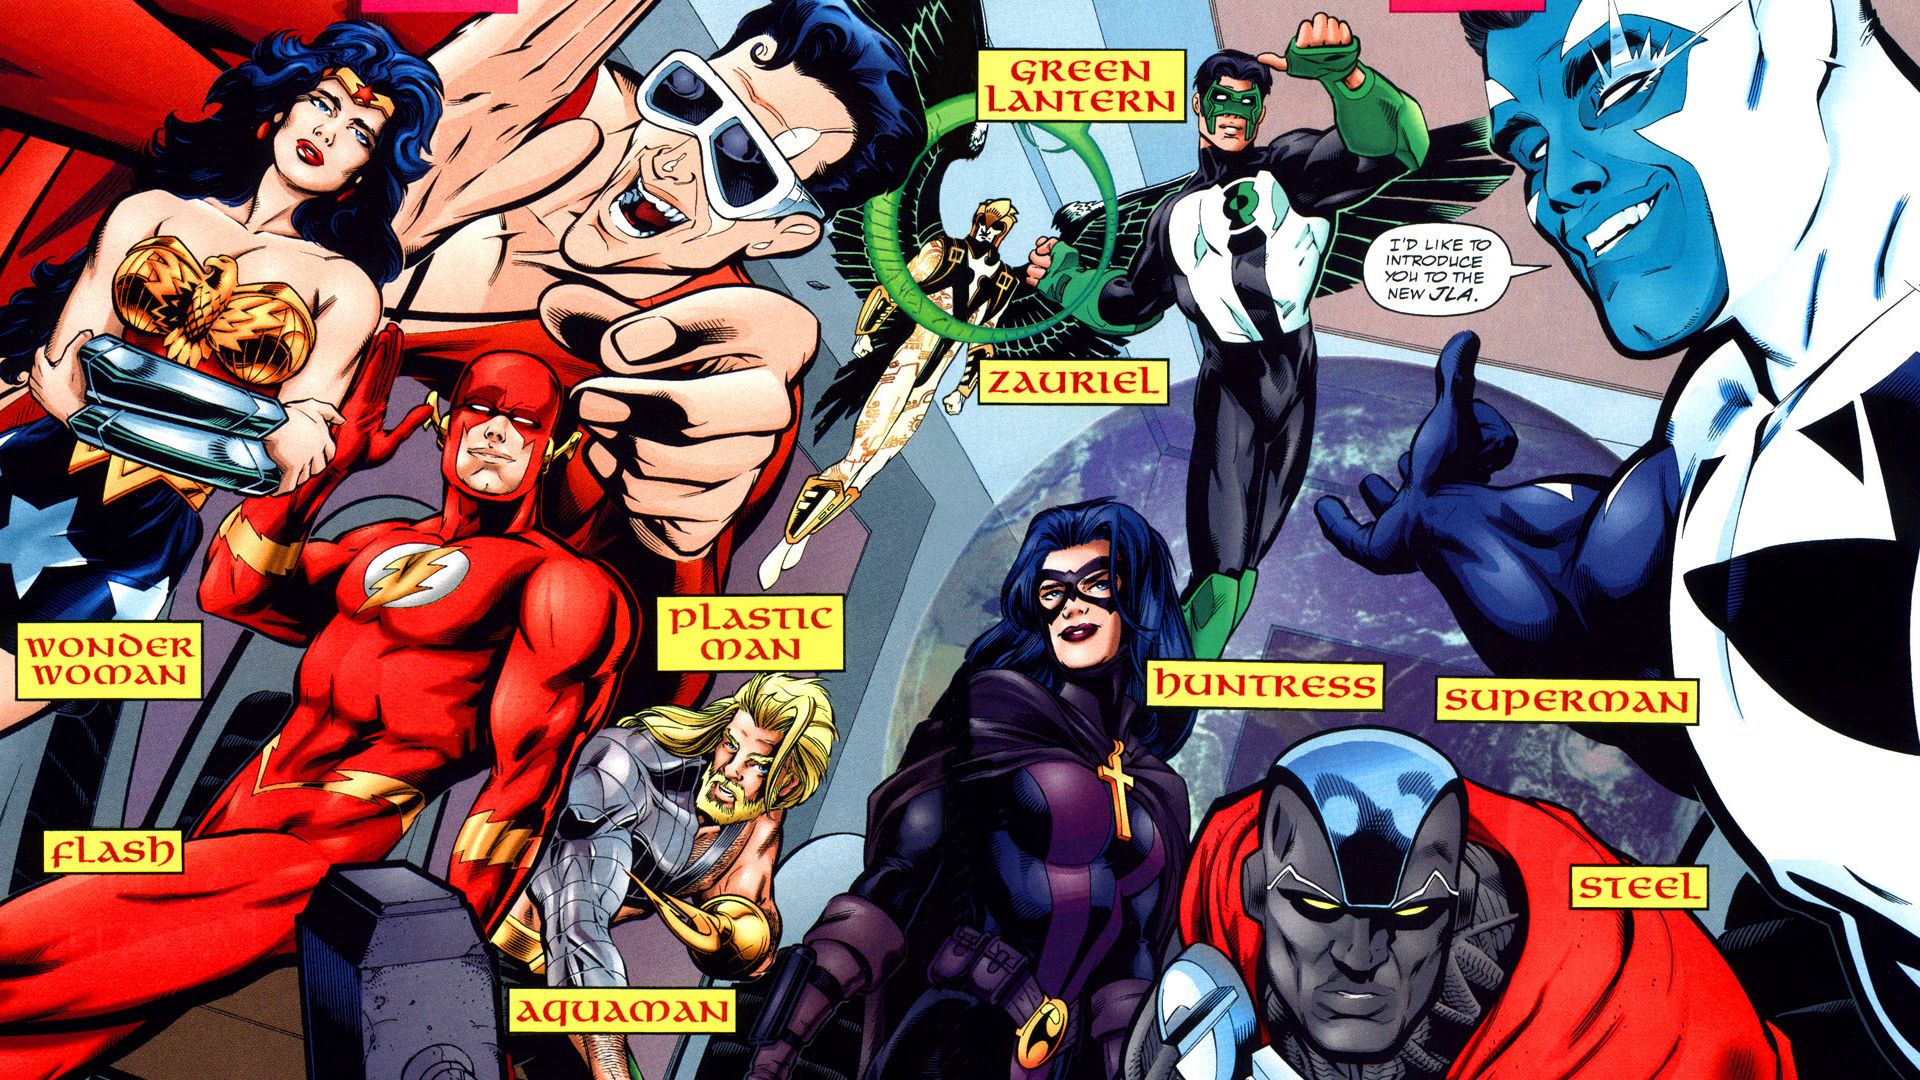 comics, justice league of america, aquaman, dc comics, flash, green lantern, huntress (dc comics), justice league, kyle rayner, plastic man, superman, wally west, wonder woman, zauriel (dc comics) 1080p